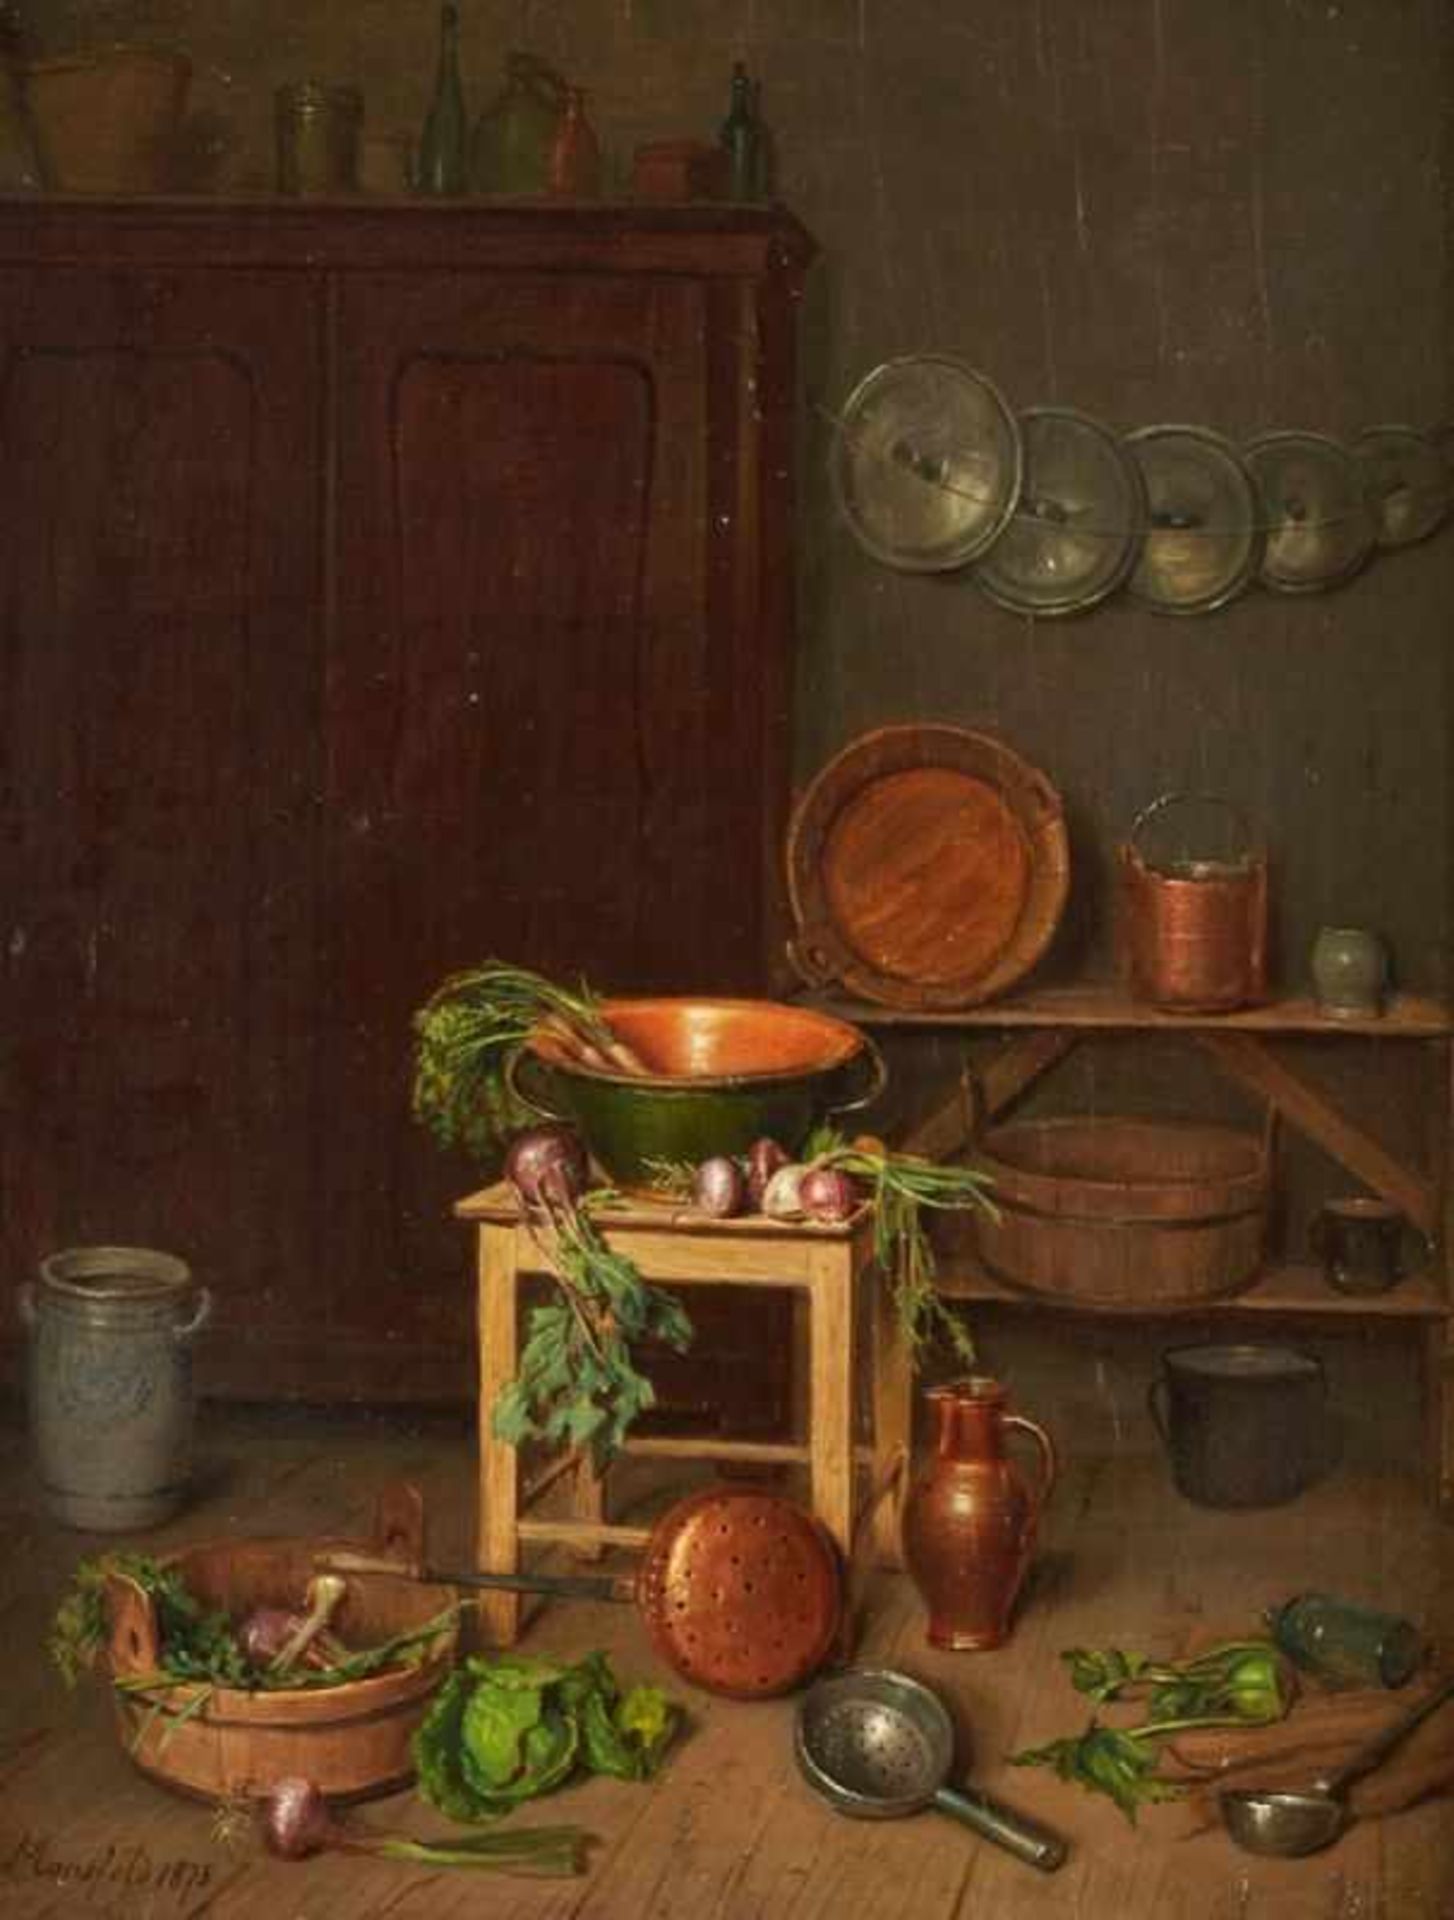 Gemälde Josef Mansfeld1819 Wien - 1894 Wien Wiener Genre- u. Bildnismaler. "Kücheninterieur mit